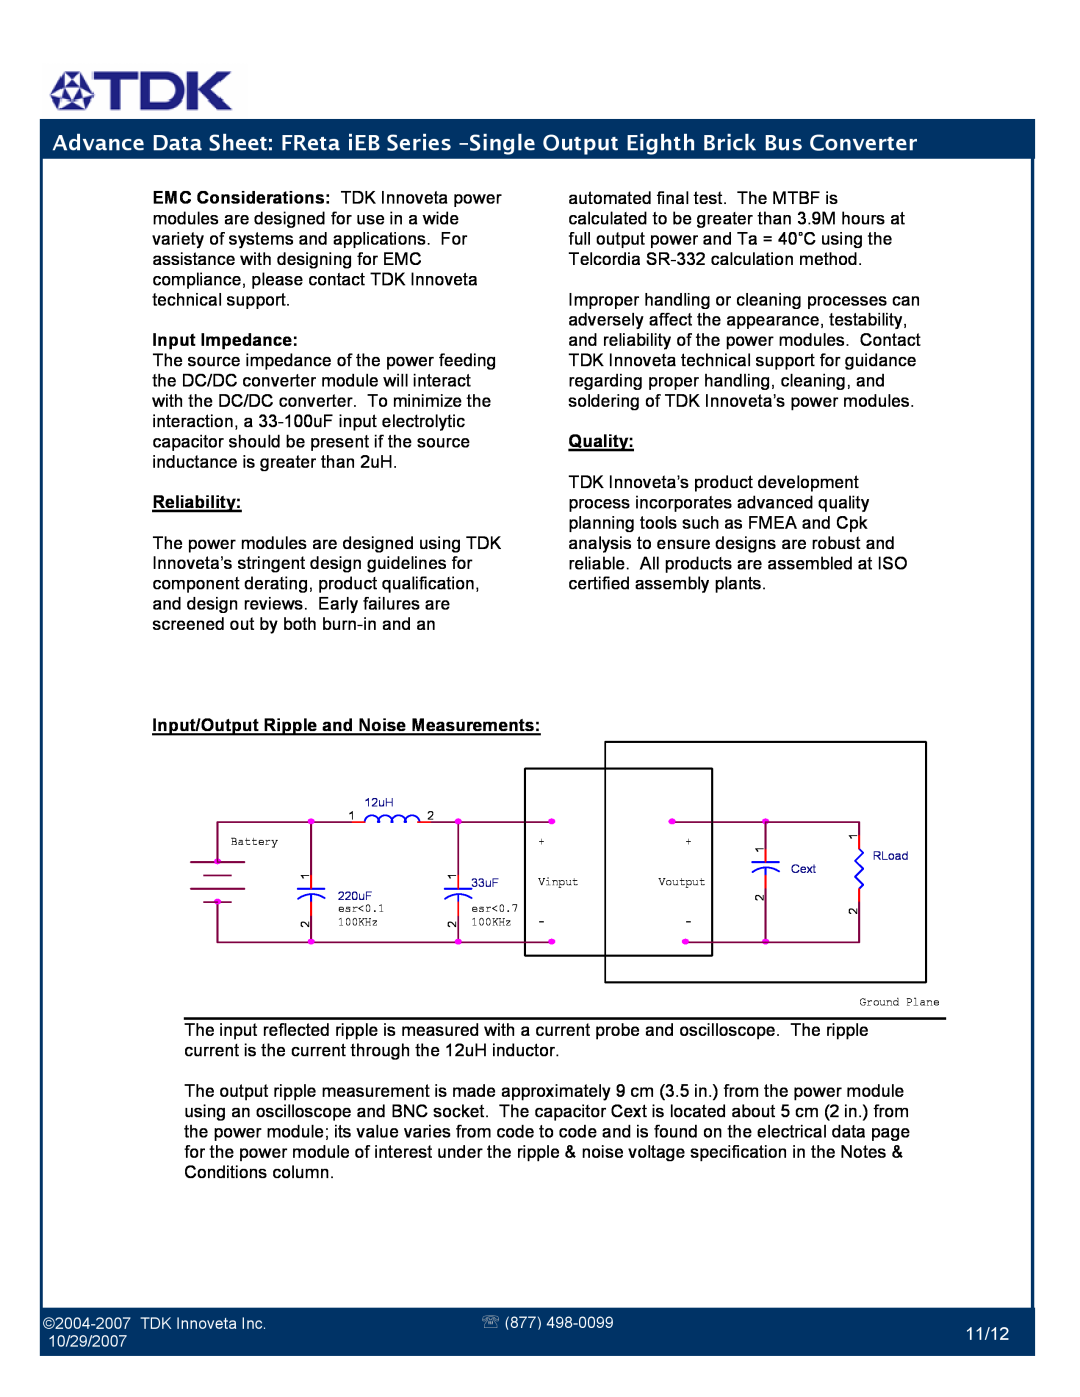 TDK iEB Series manual 11/12, Input Impedance 